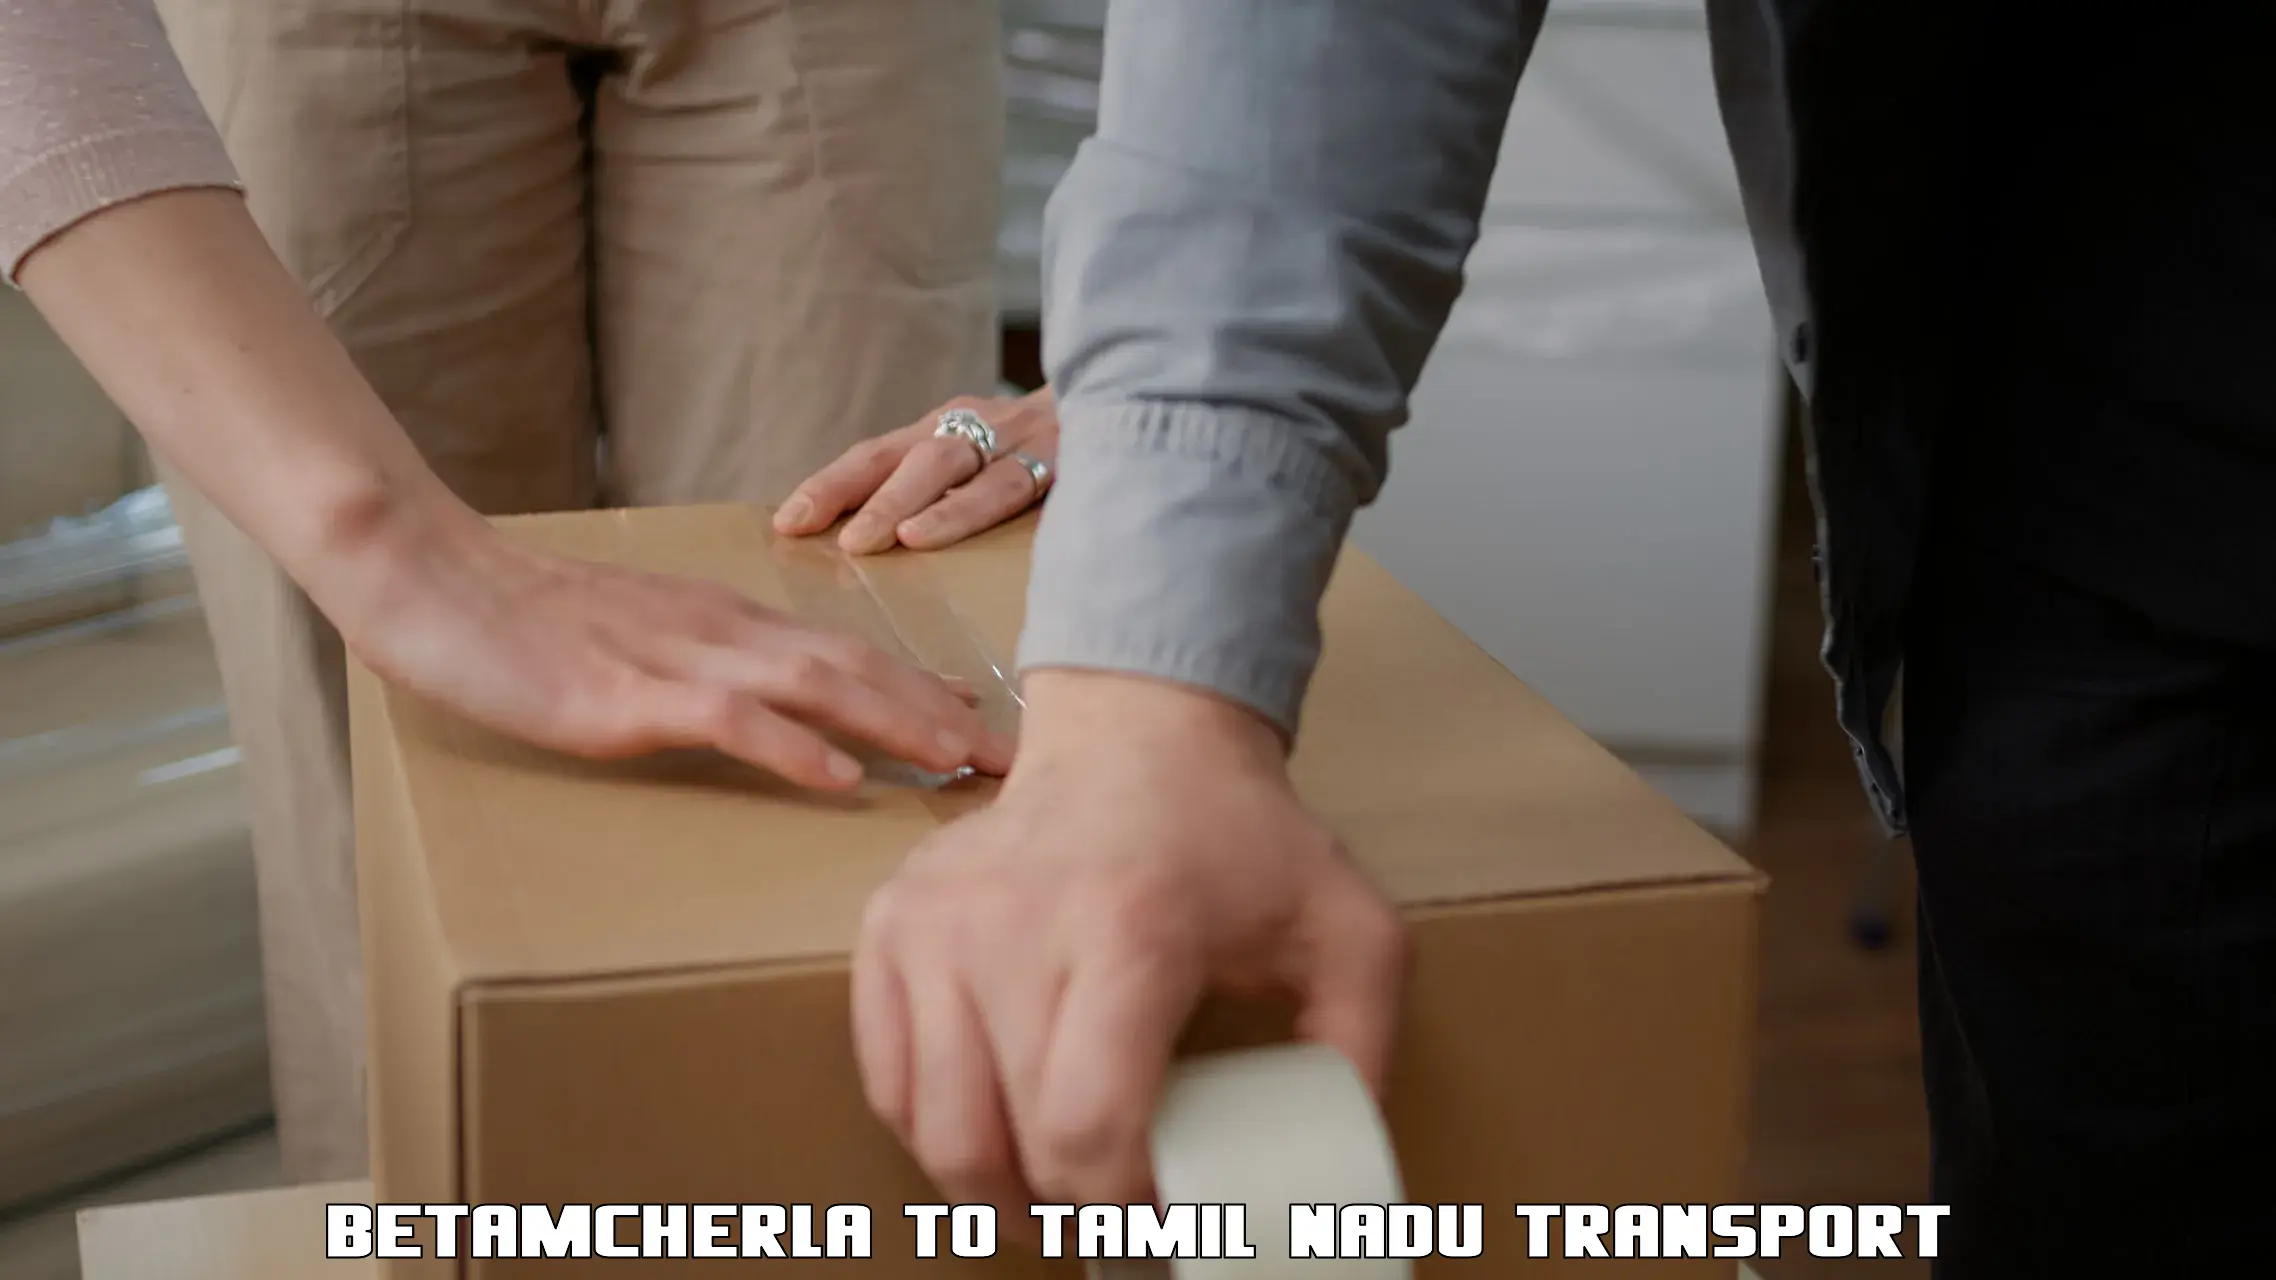 Daily transport service Betamcherla to Tamil Nadu